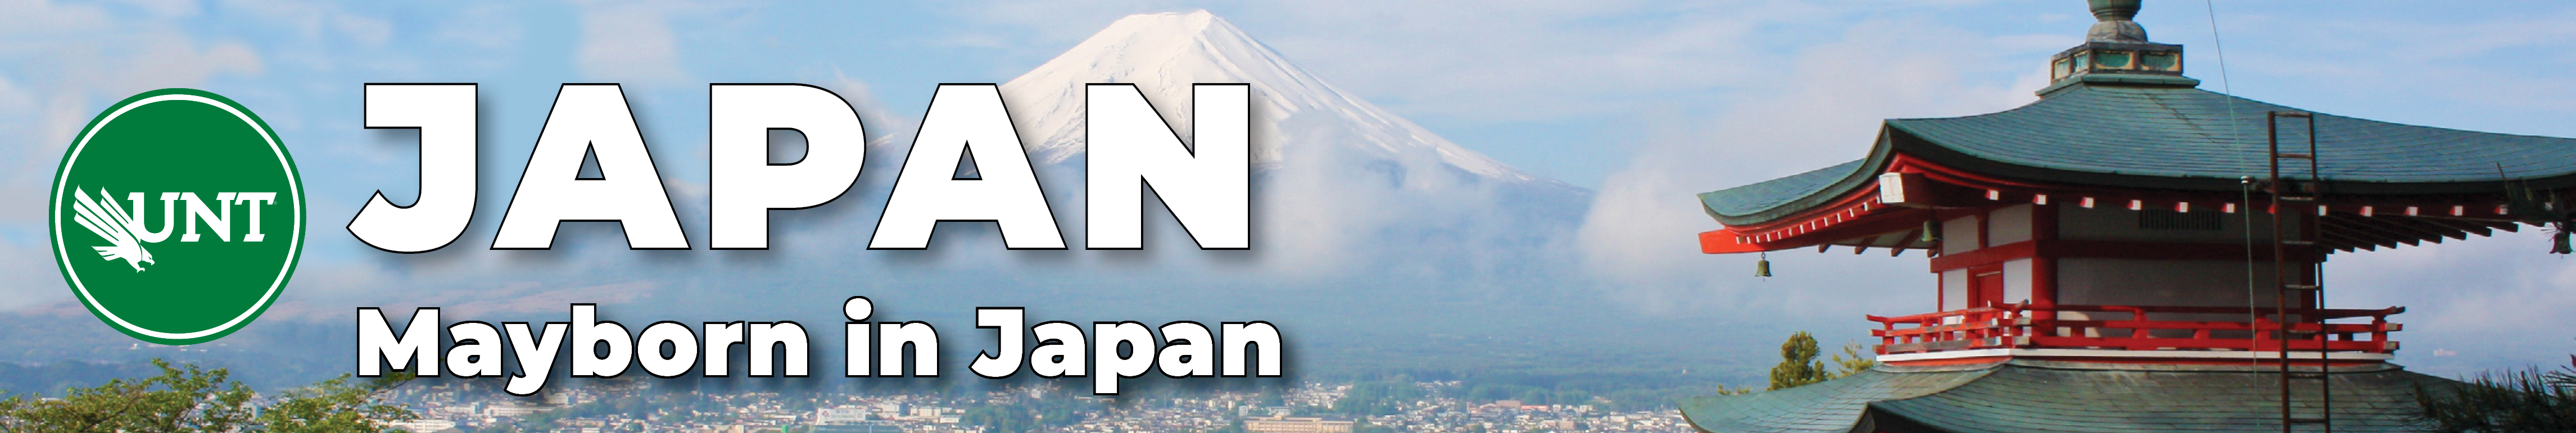 Mayborn in Japan Banner